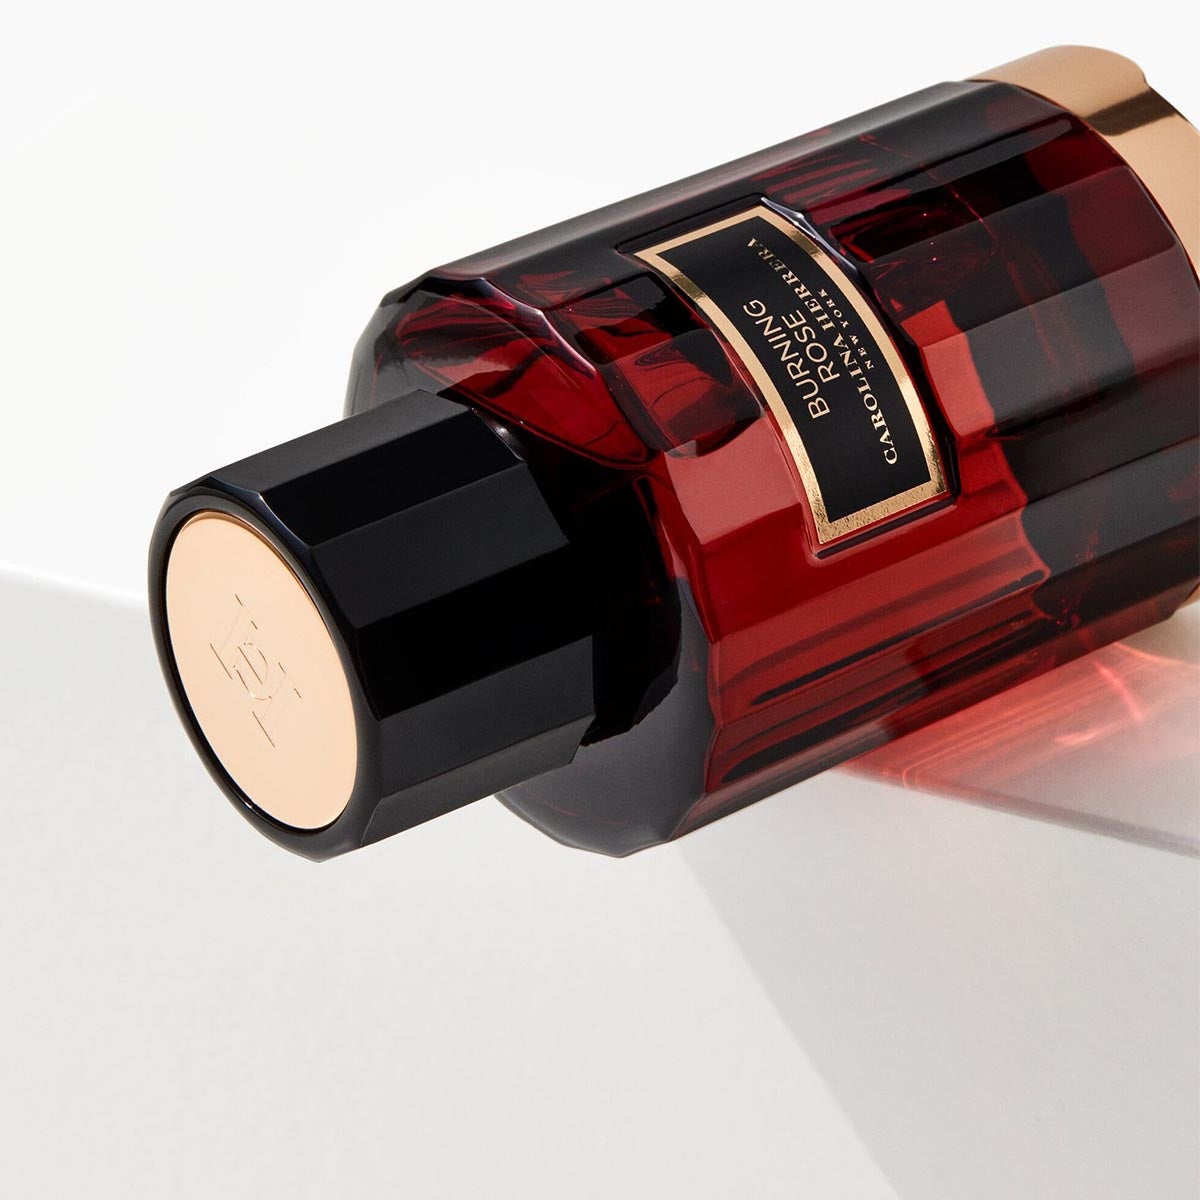 Carolina Herrera Confidential Collection Gift Set - My Perfume Shop Australia